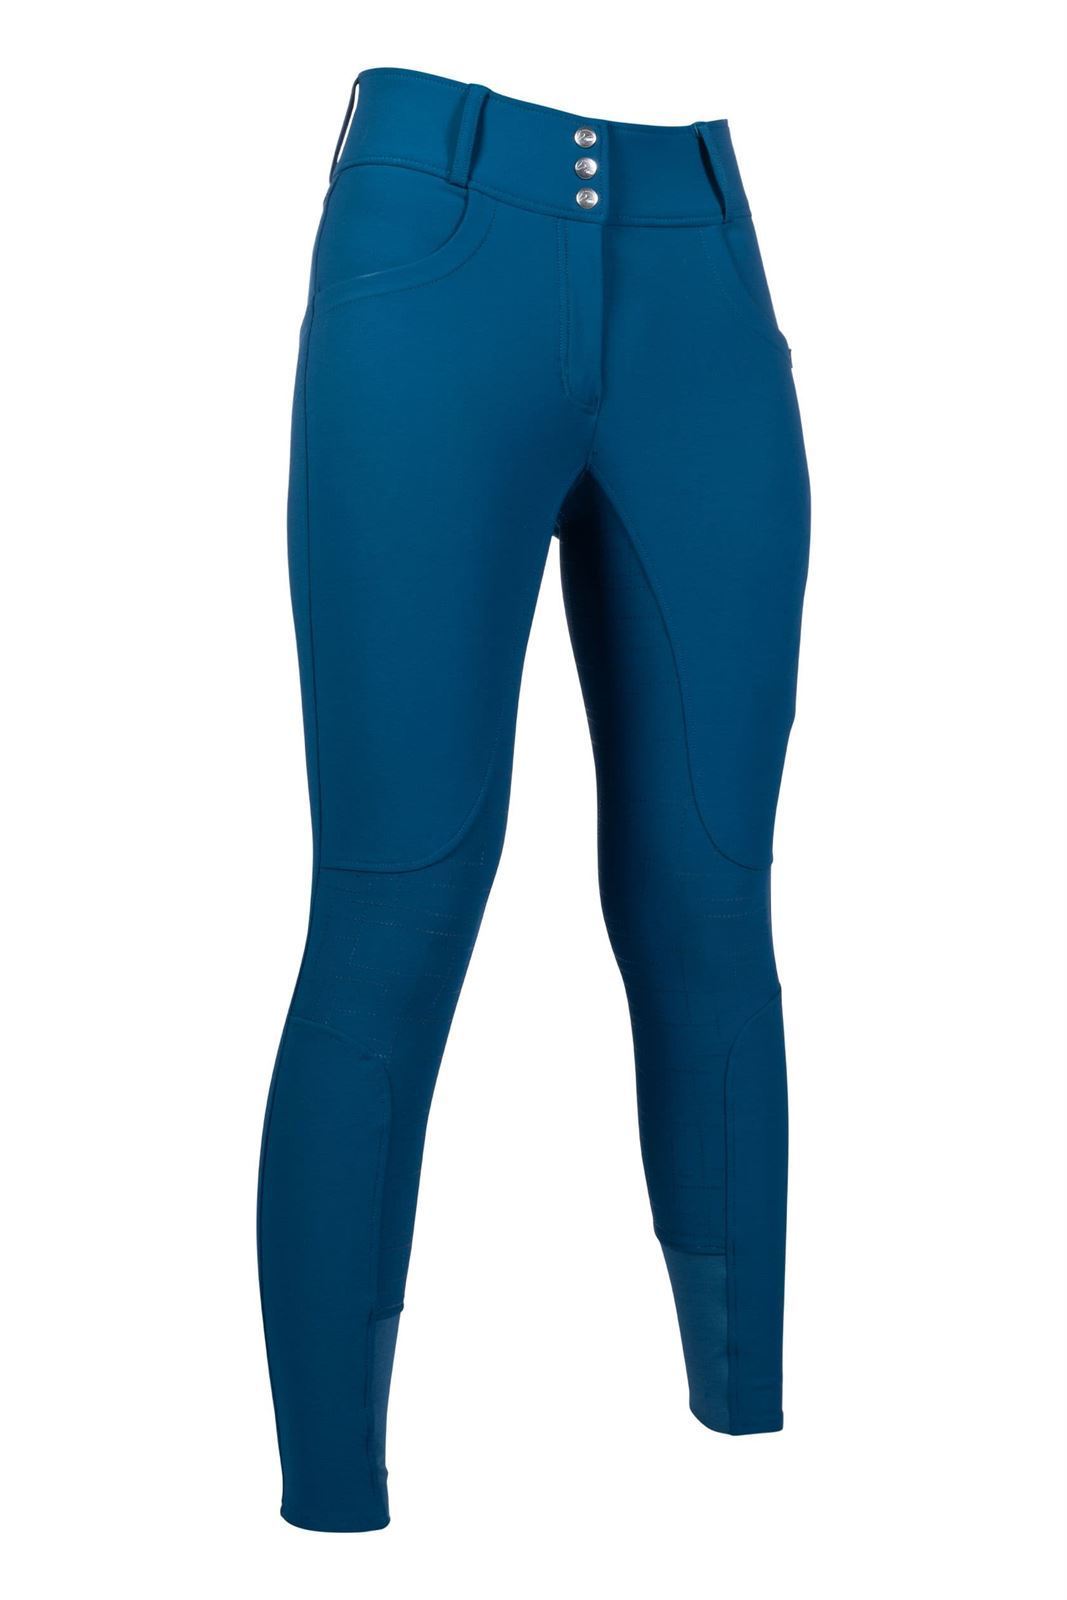 Pantalón mujer HKM Sports Equipment Port royal azul culera grip tejido grueso termoaislante - Imagen 3